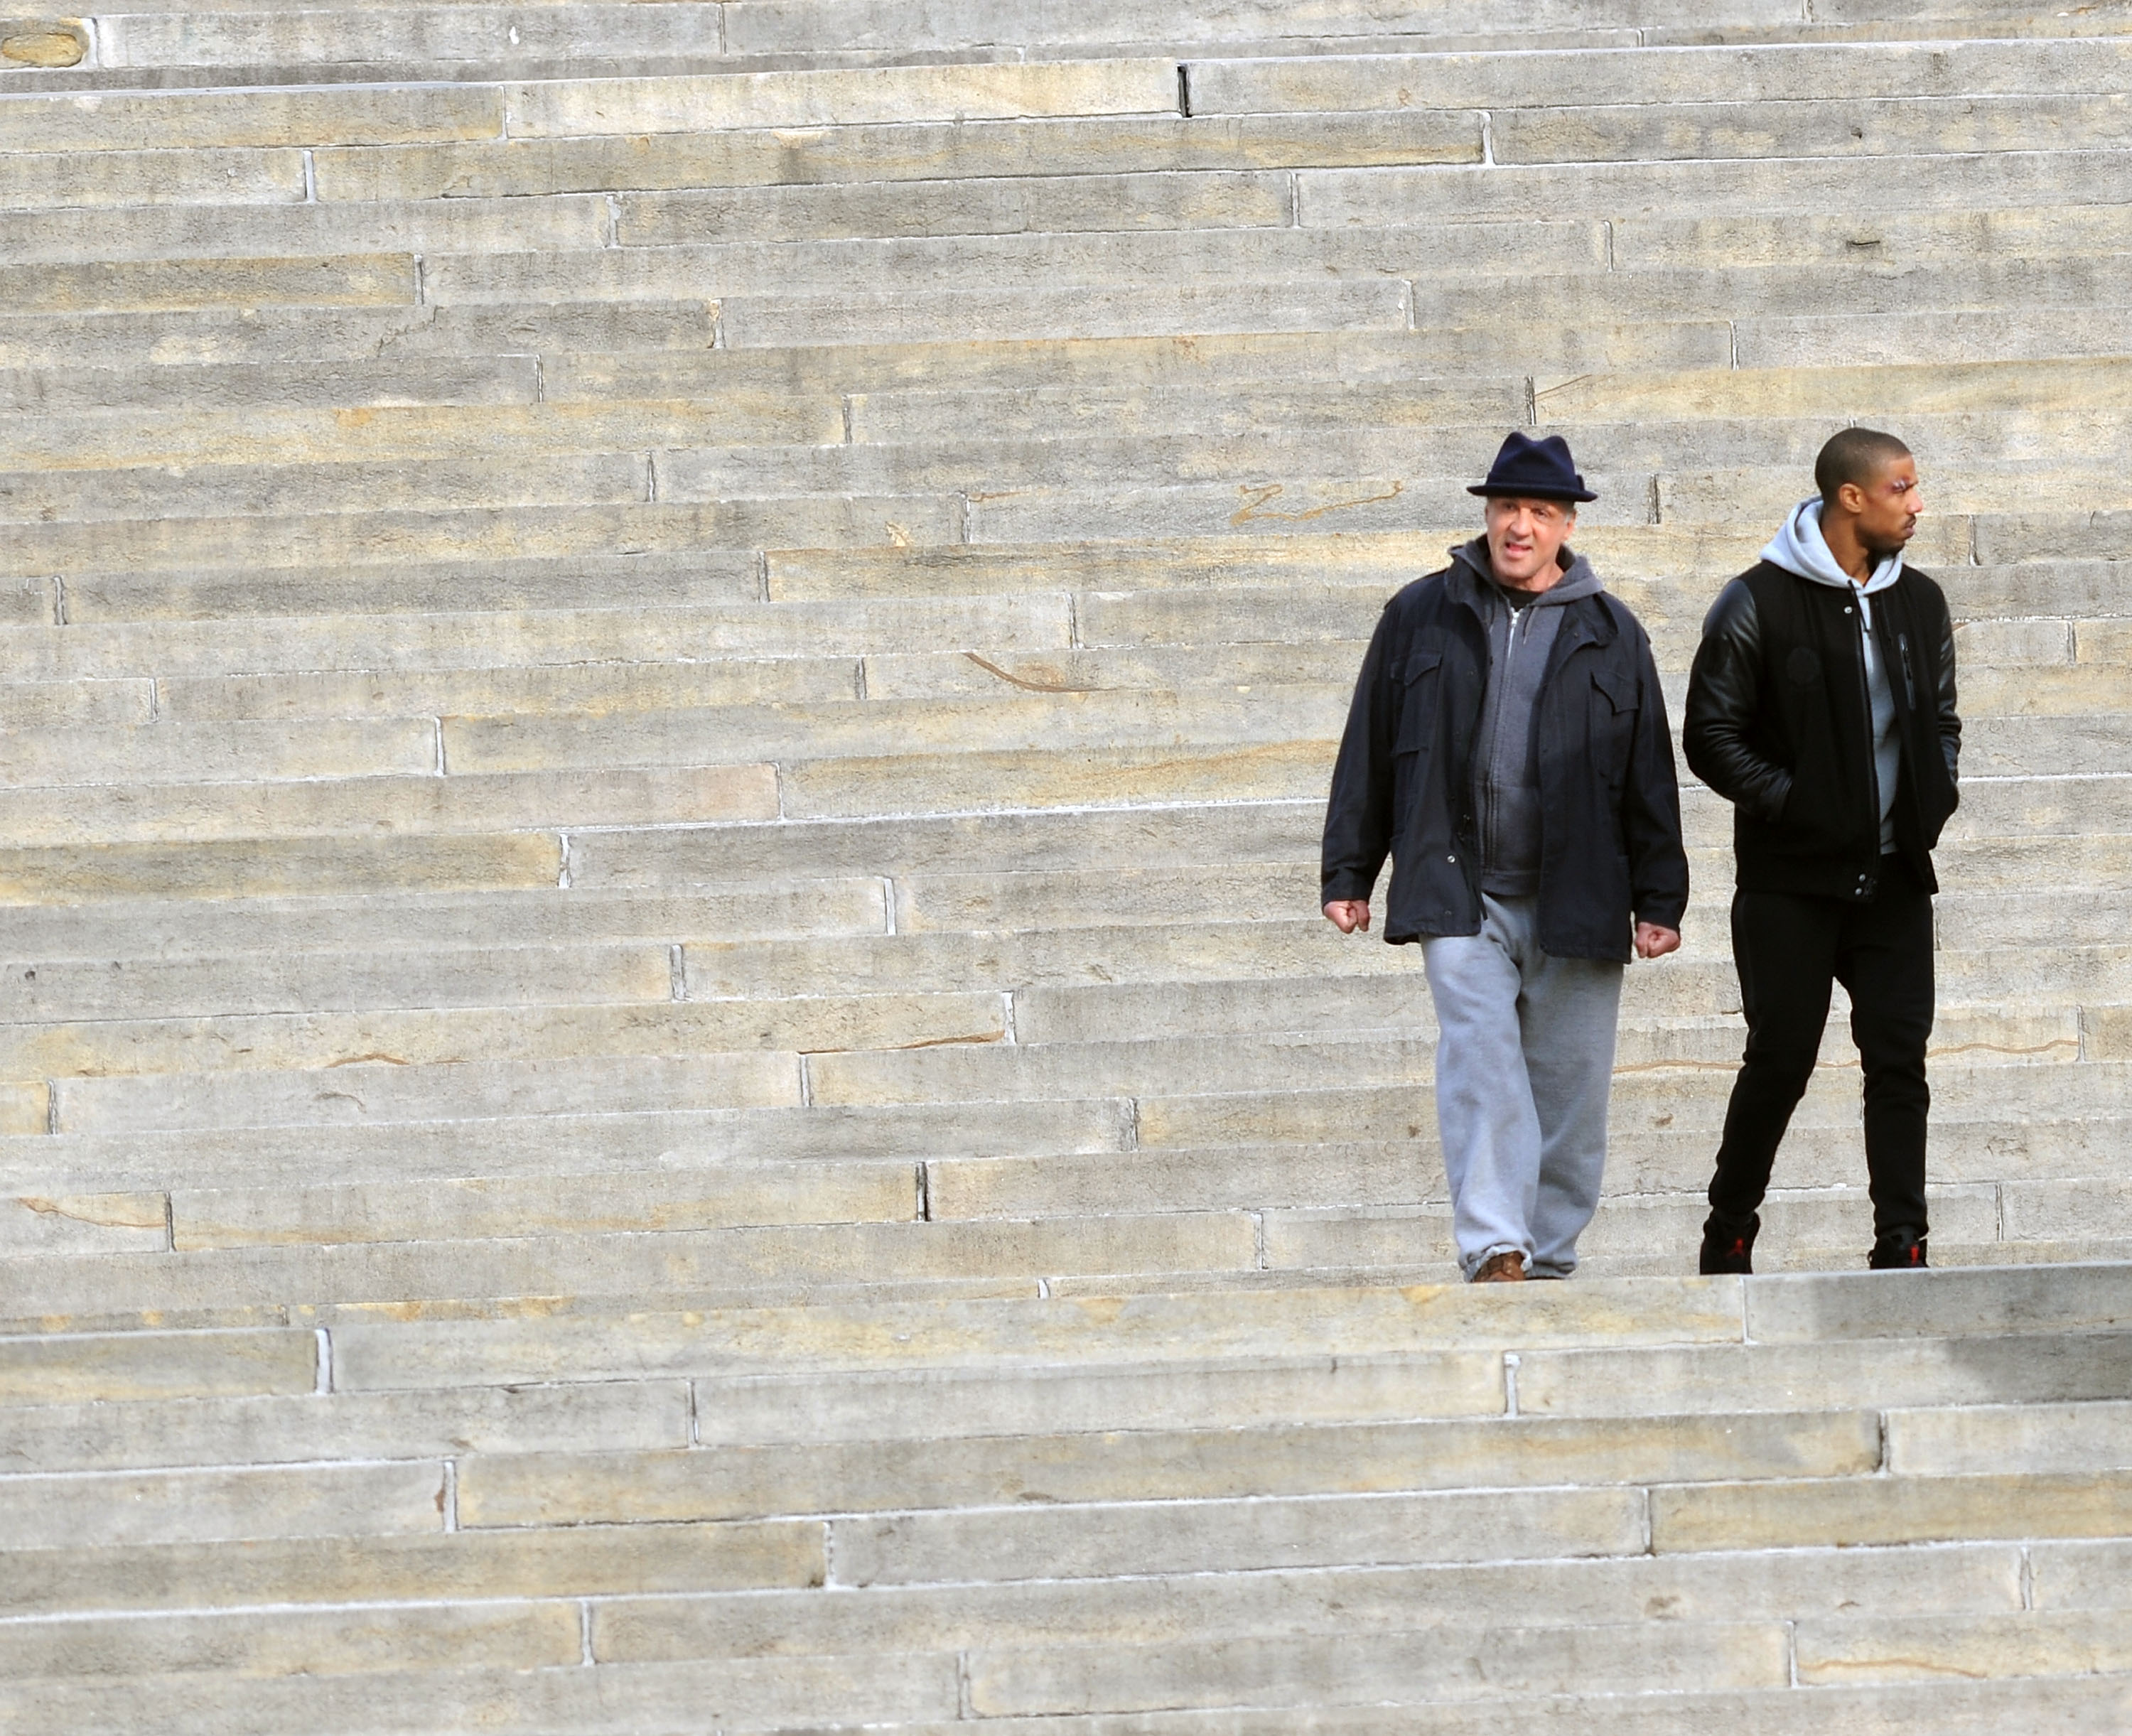 Sylvester Stallone and Michael B. Jordan descend the famous Philadelphia Museum steps